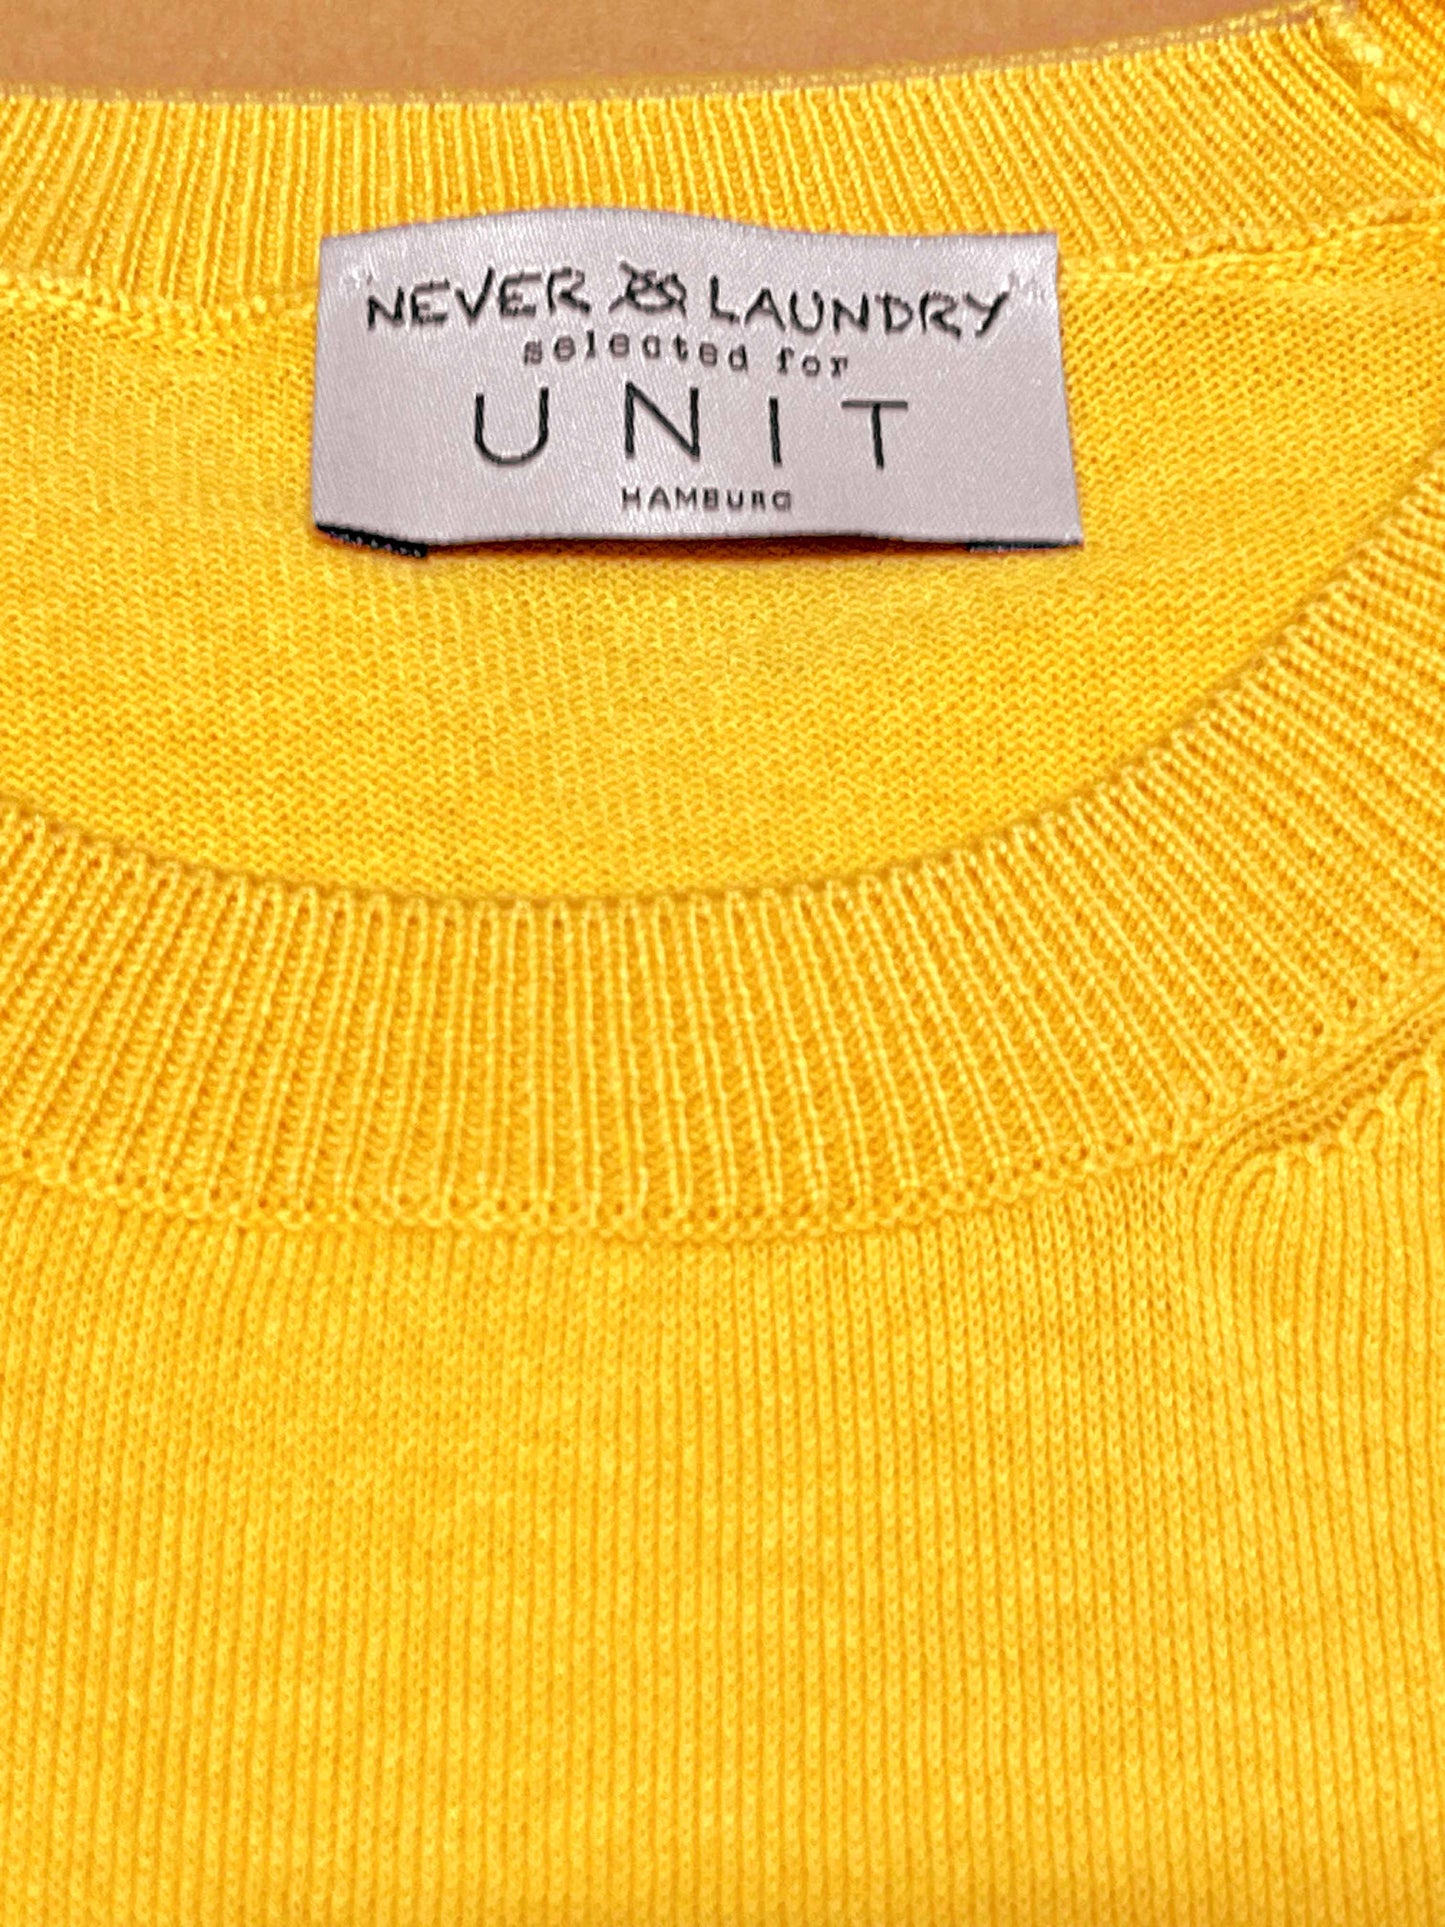 Never Laundry, Organic Cotton T-Shirt, Raglan Schulter, sonnenblumengelb - UNIT Hamburg